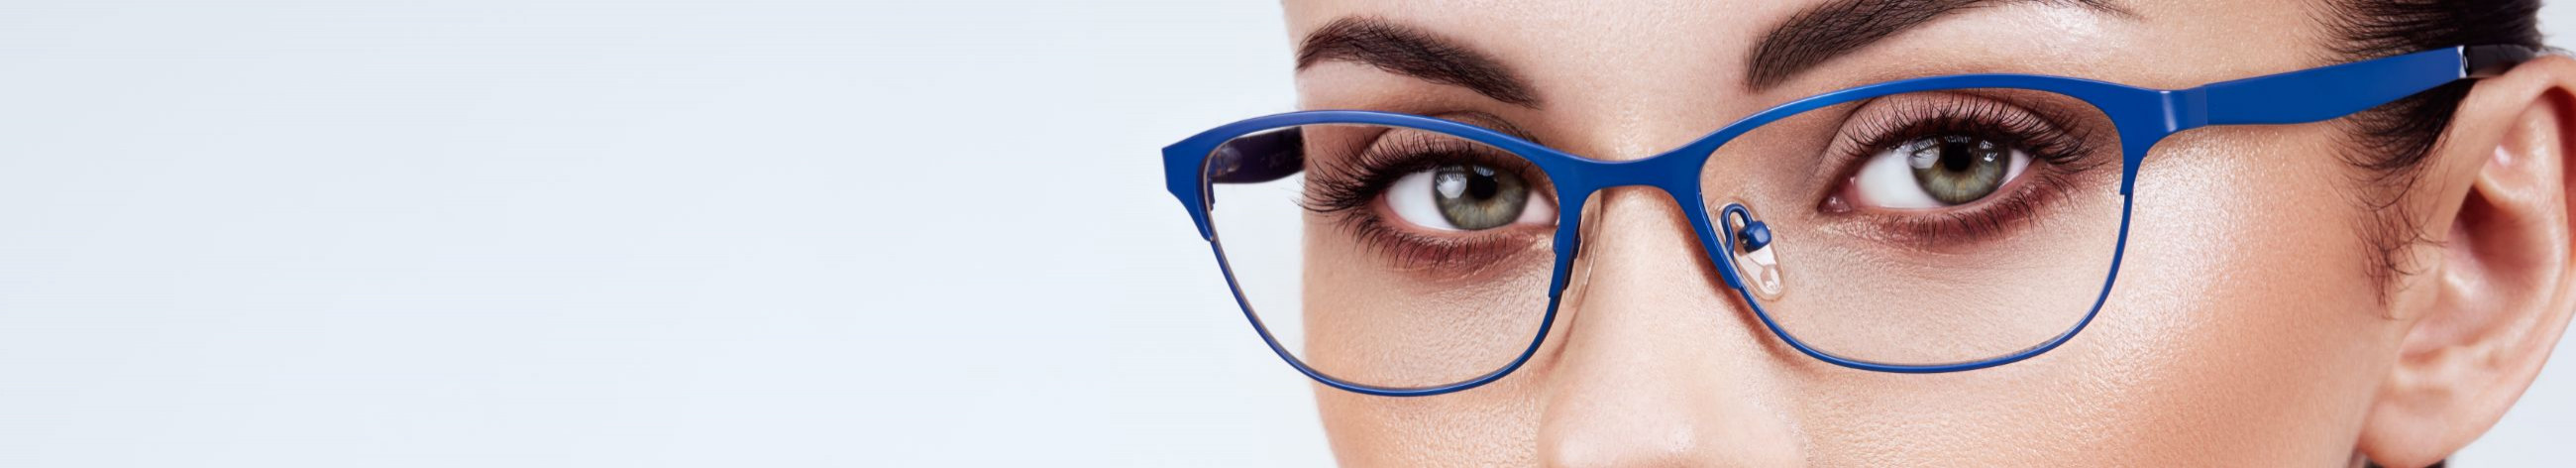 Optics, eyeglass repair, Eyewear Frames, goggle lenses, sunglasses, eyewear maintenance, contact lenses, lens fluids, Vision control, Manufacture of glasses